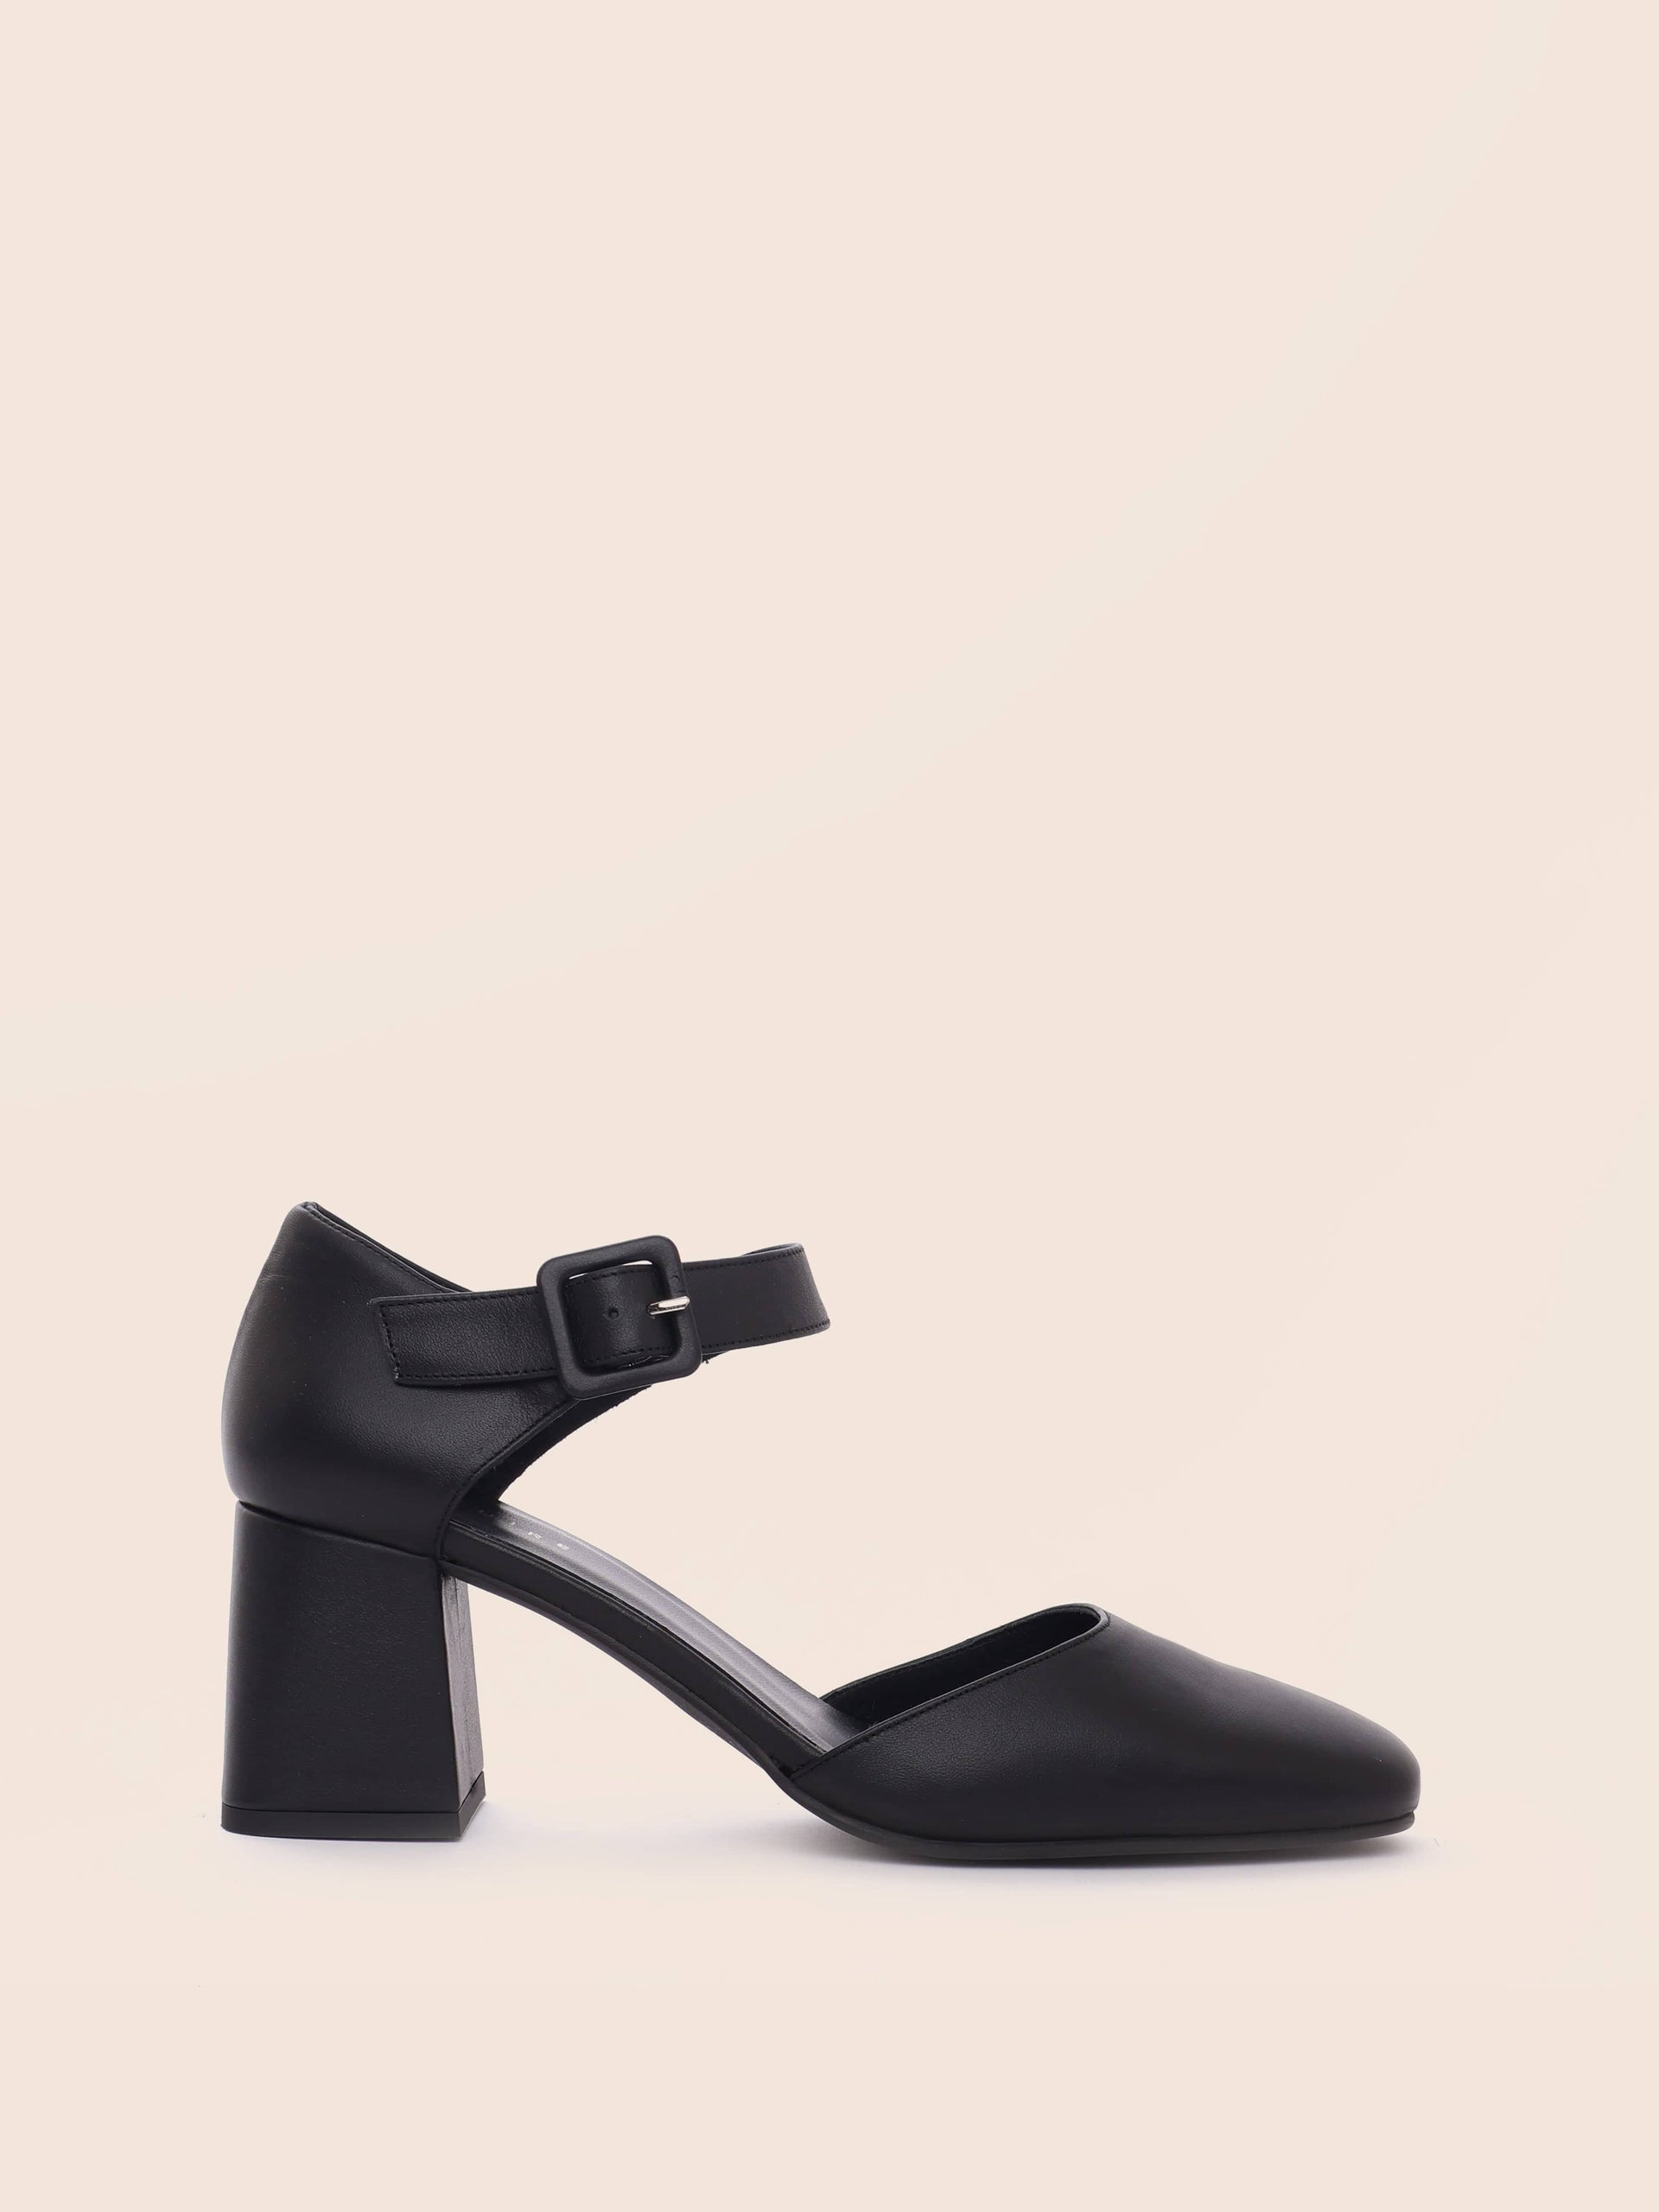 Marbella Black Mary Jane Closed-Toe Heel | Maguire Shoes